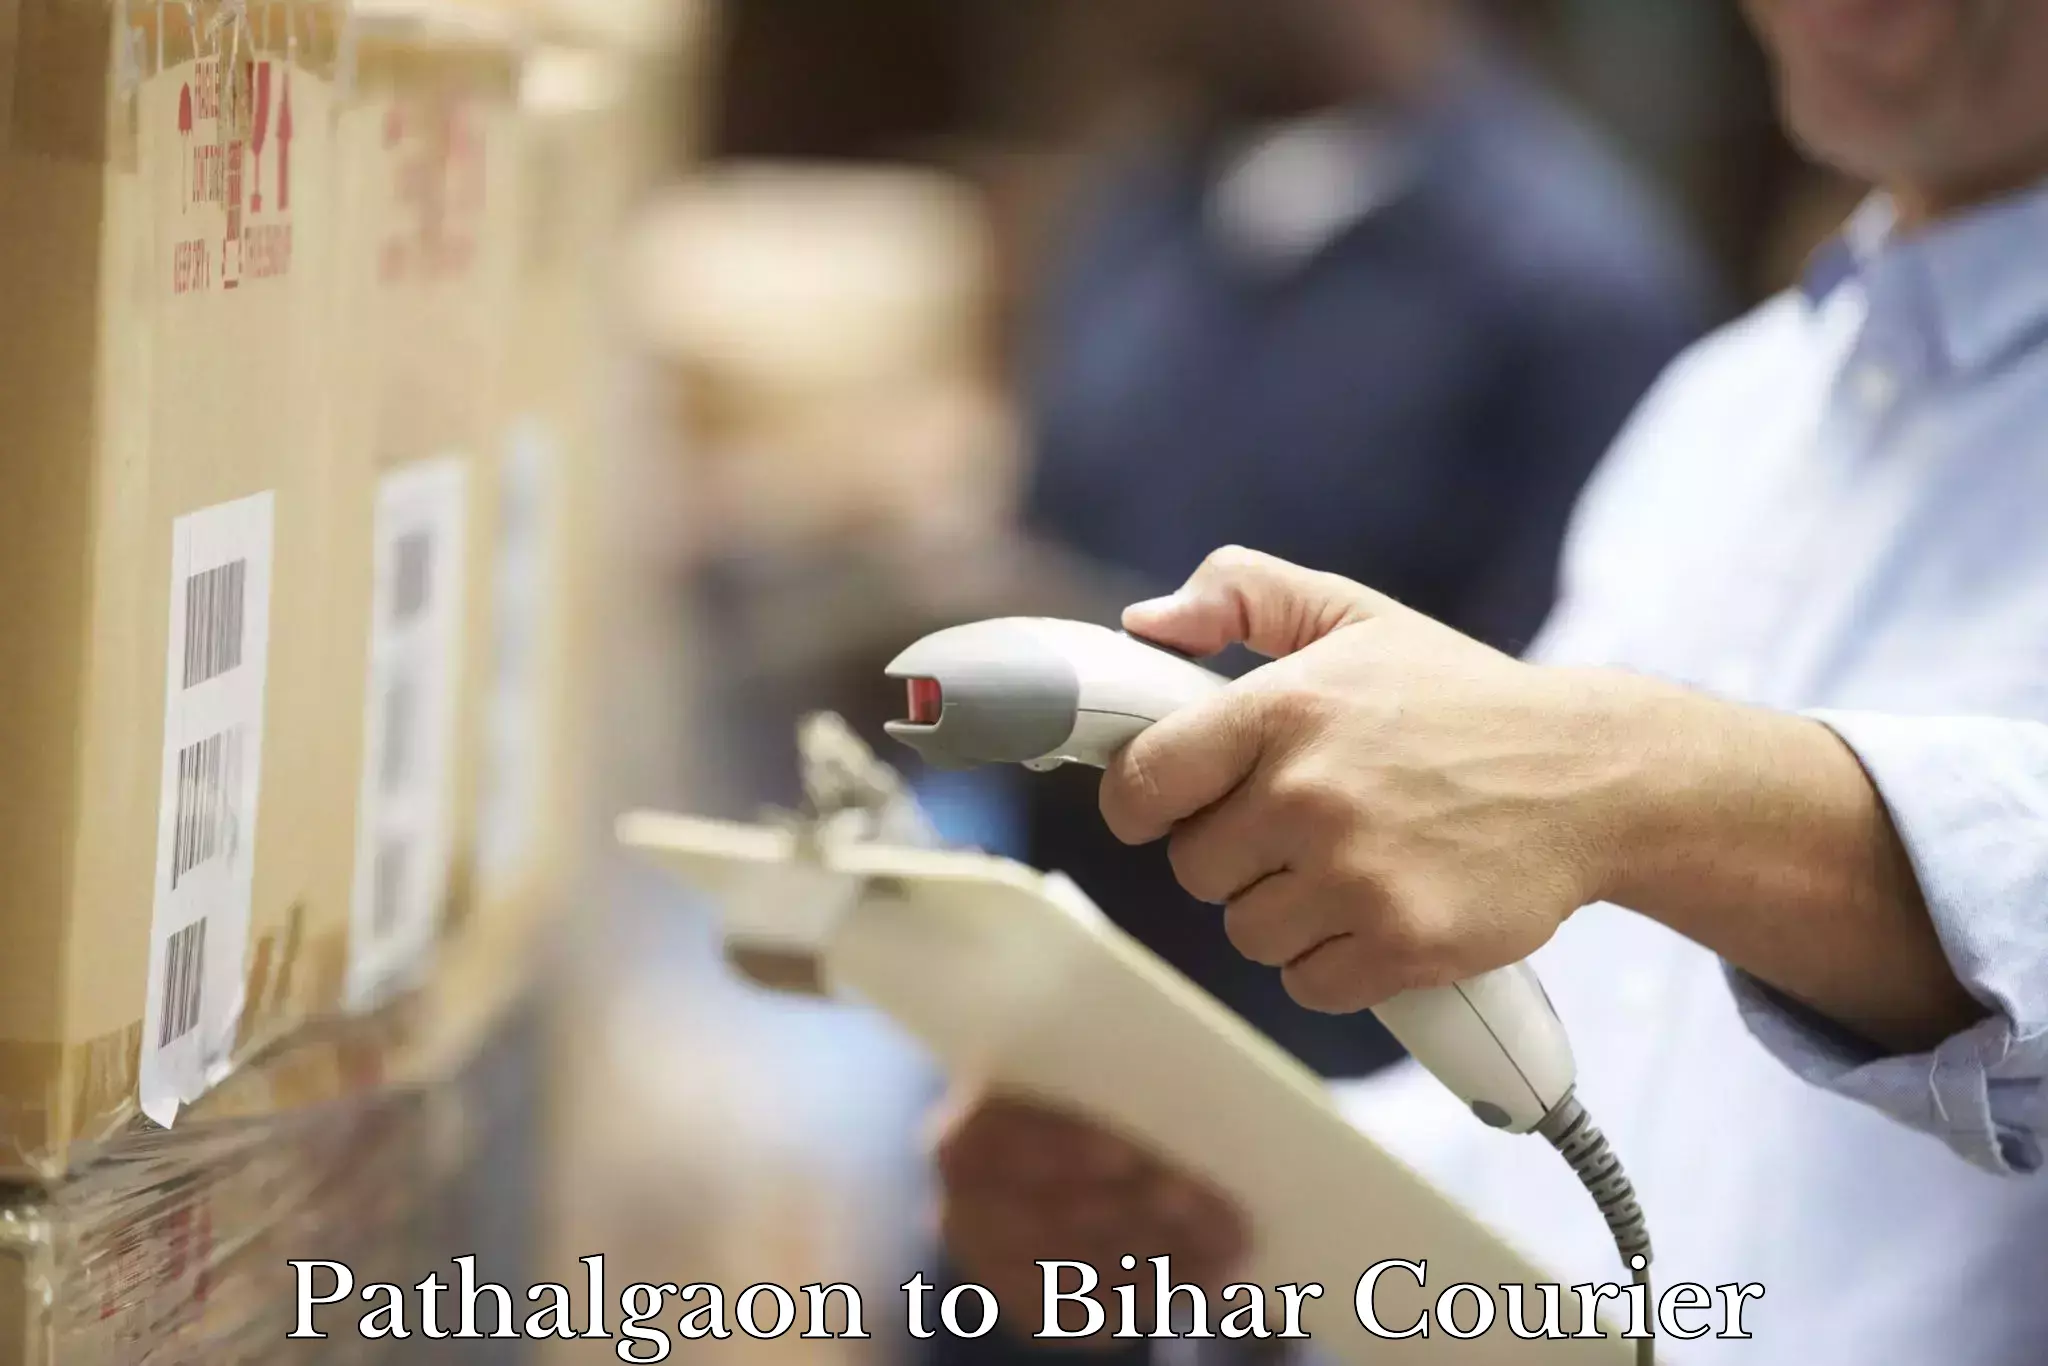 Reliable delivery network Pathalgaon to Mashrakh